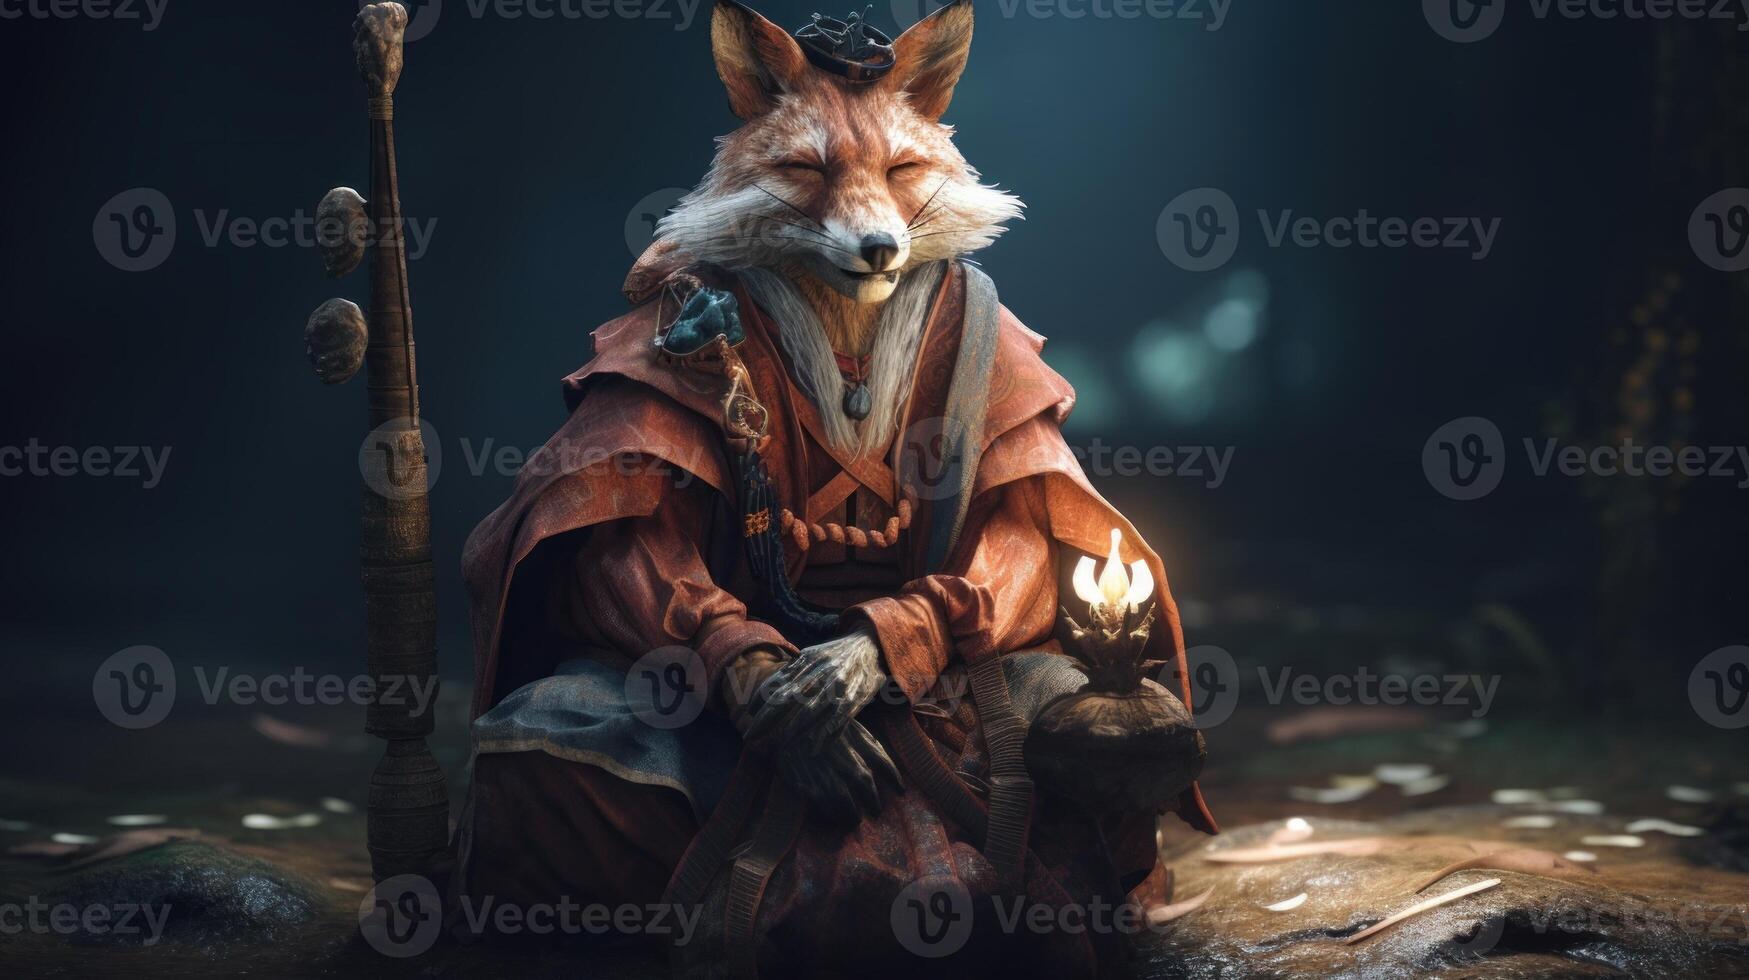 Shotfox anthropomorphism shaman wizard sitting on jungle photo